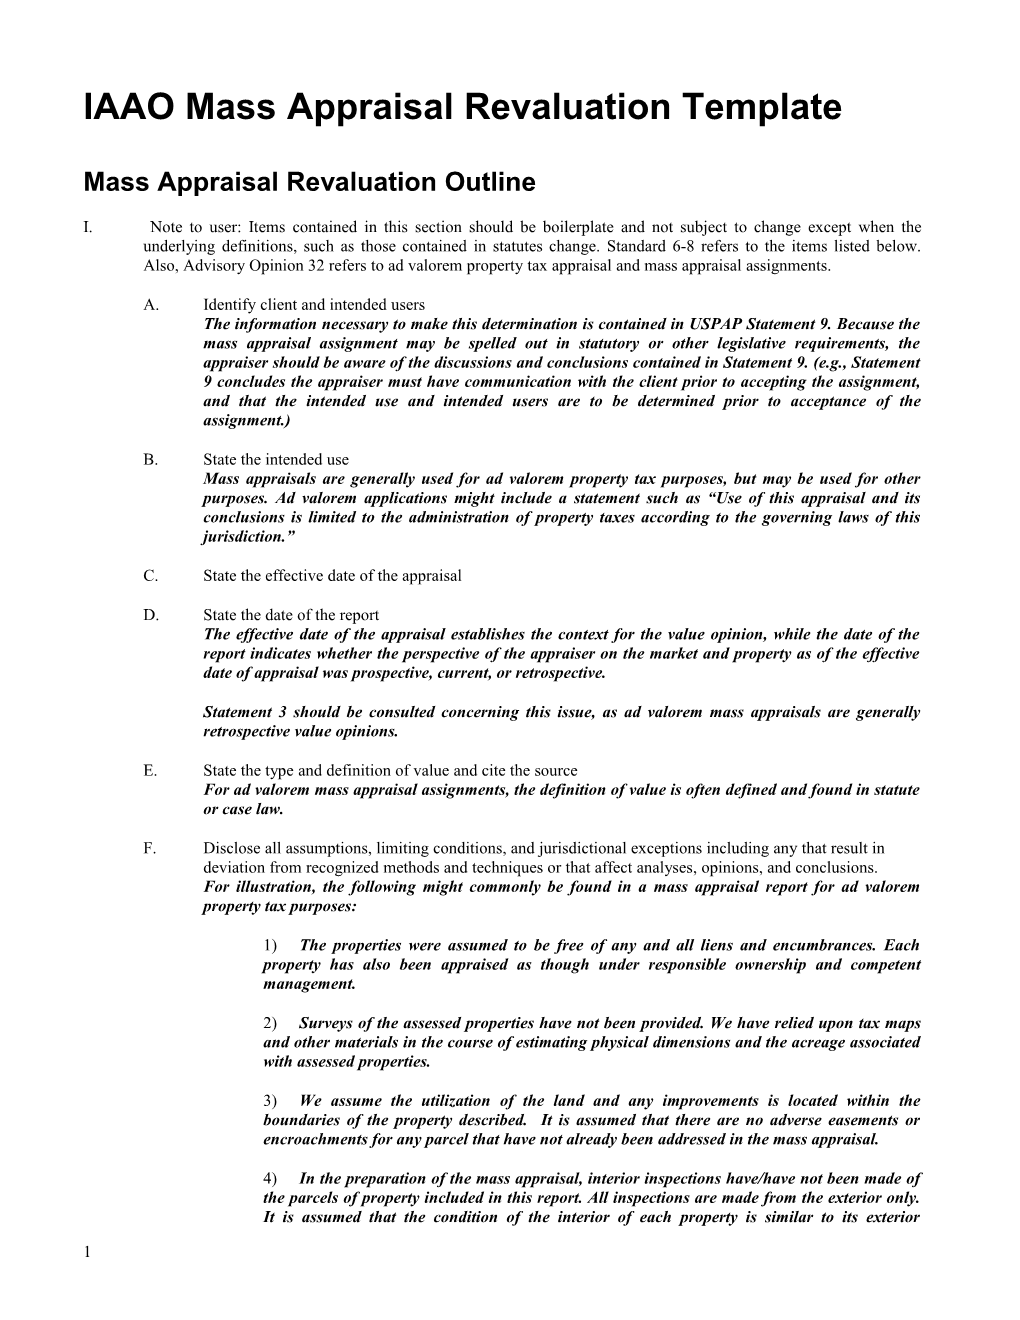 IAAO Mass Appraisal Revaluationtemplate